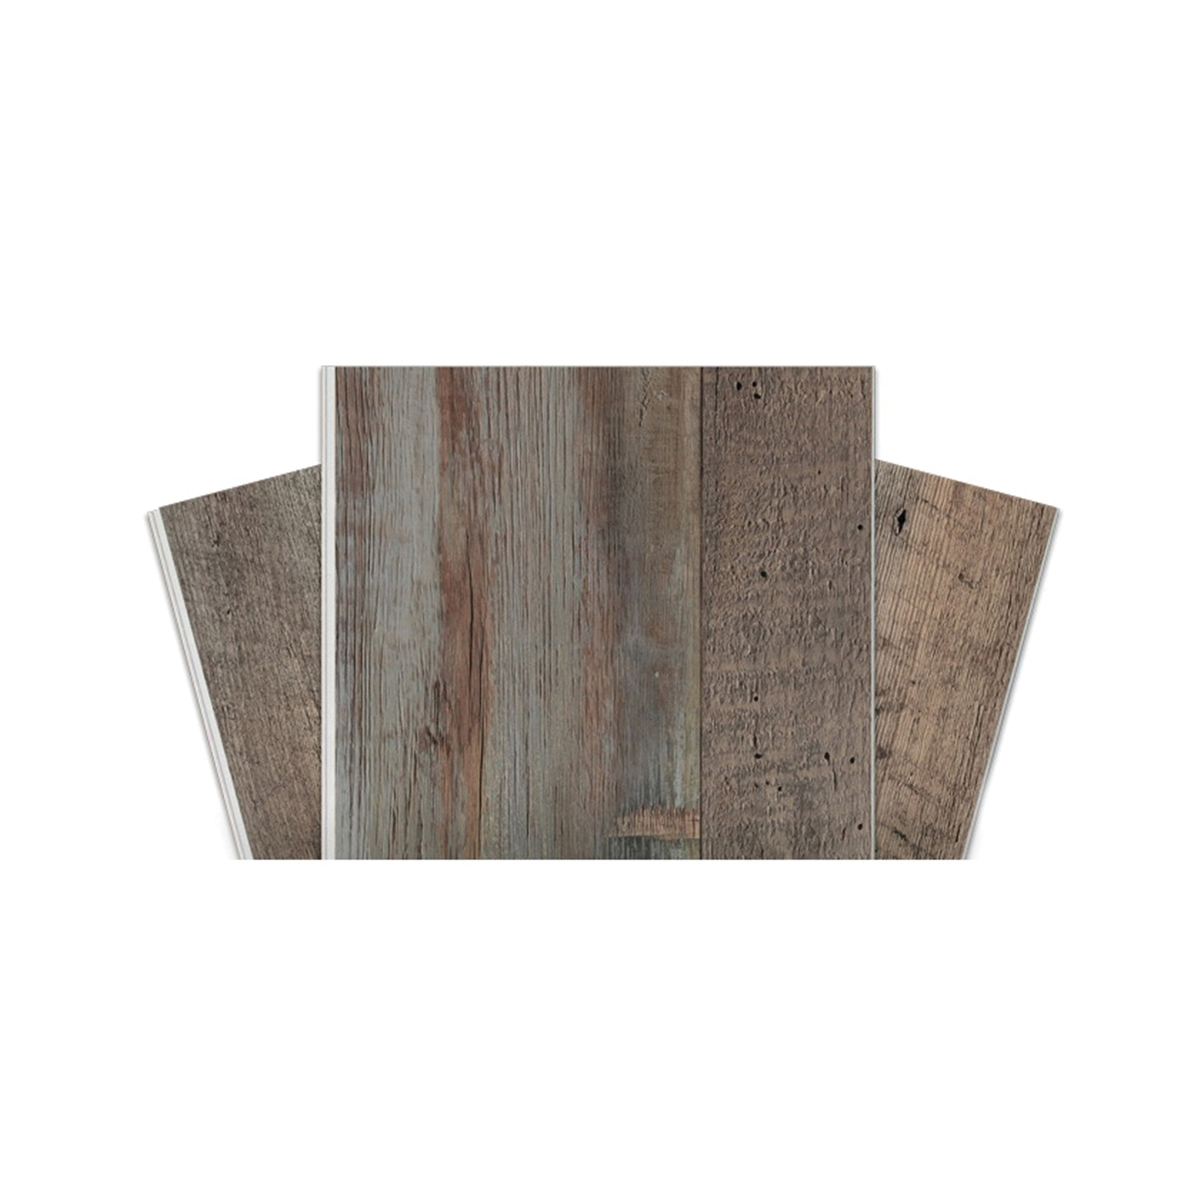 Pro Classic Series 7904108400 Plank Flooring, 48 in L, 7-1/8 in W, Micro Beveled Edge, Wood Grain Pattern, Vinyl